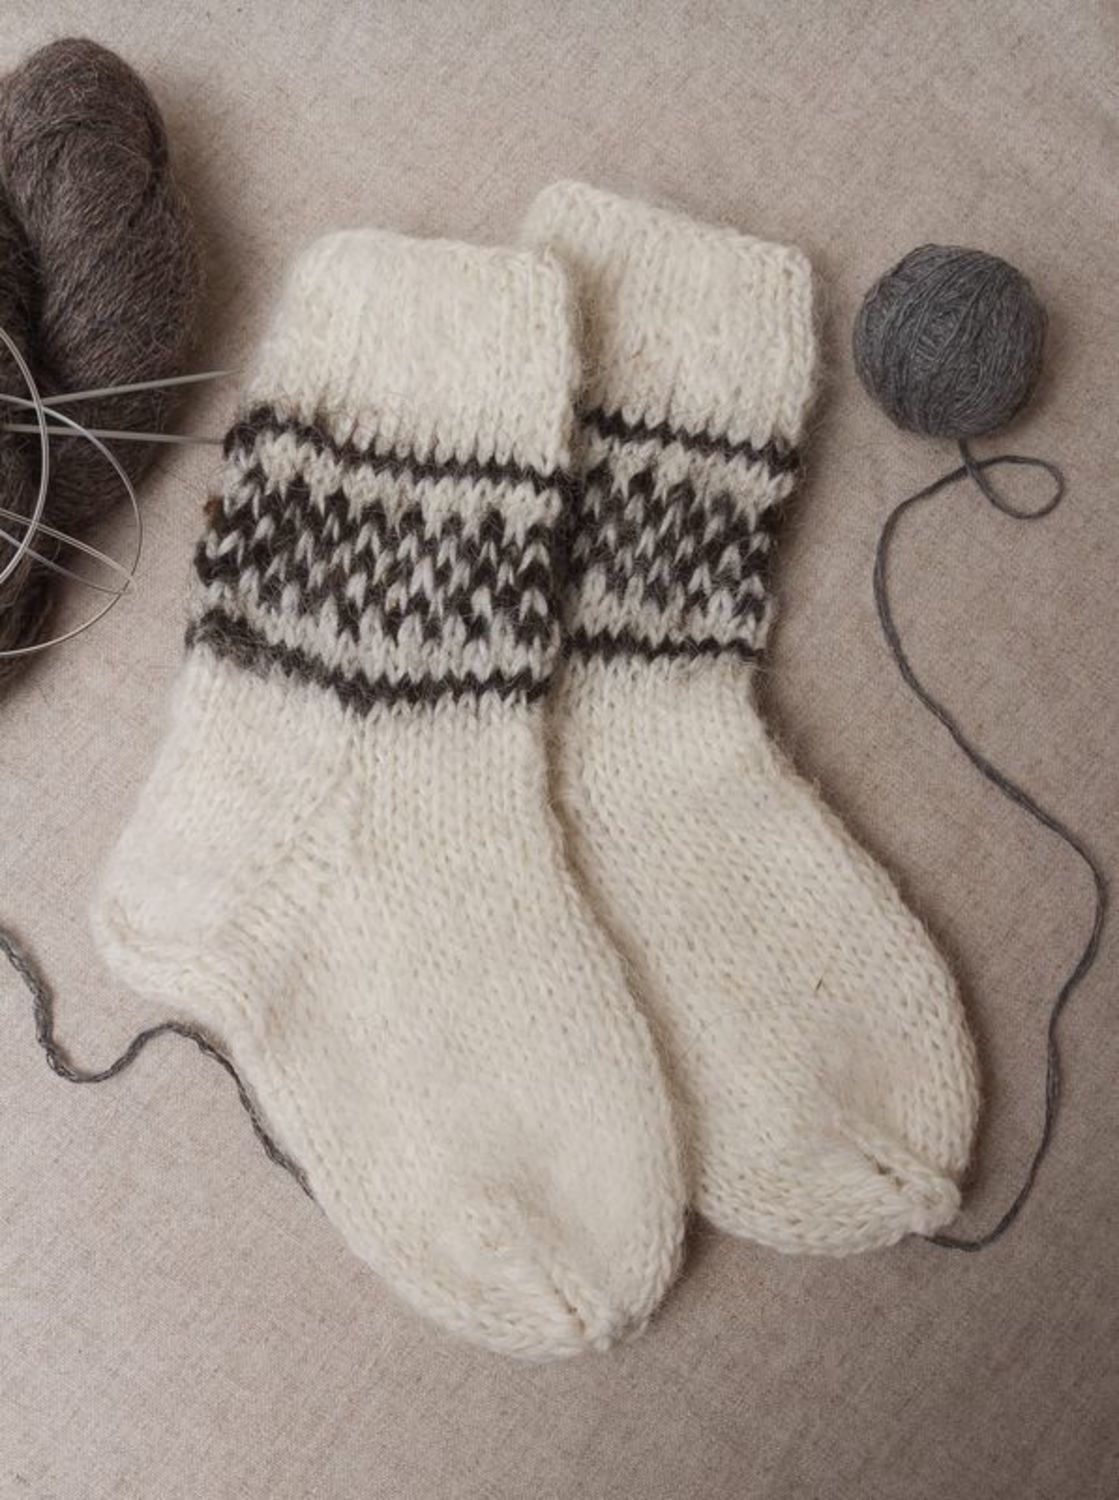 Men's socks made of wool photo 1